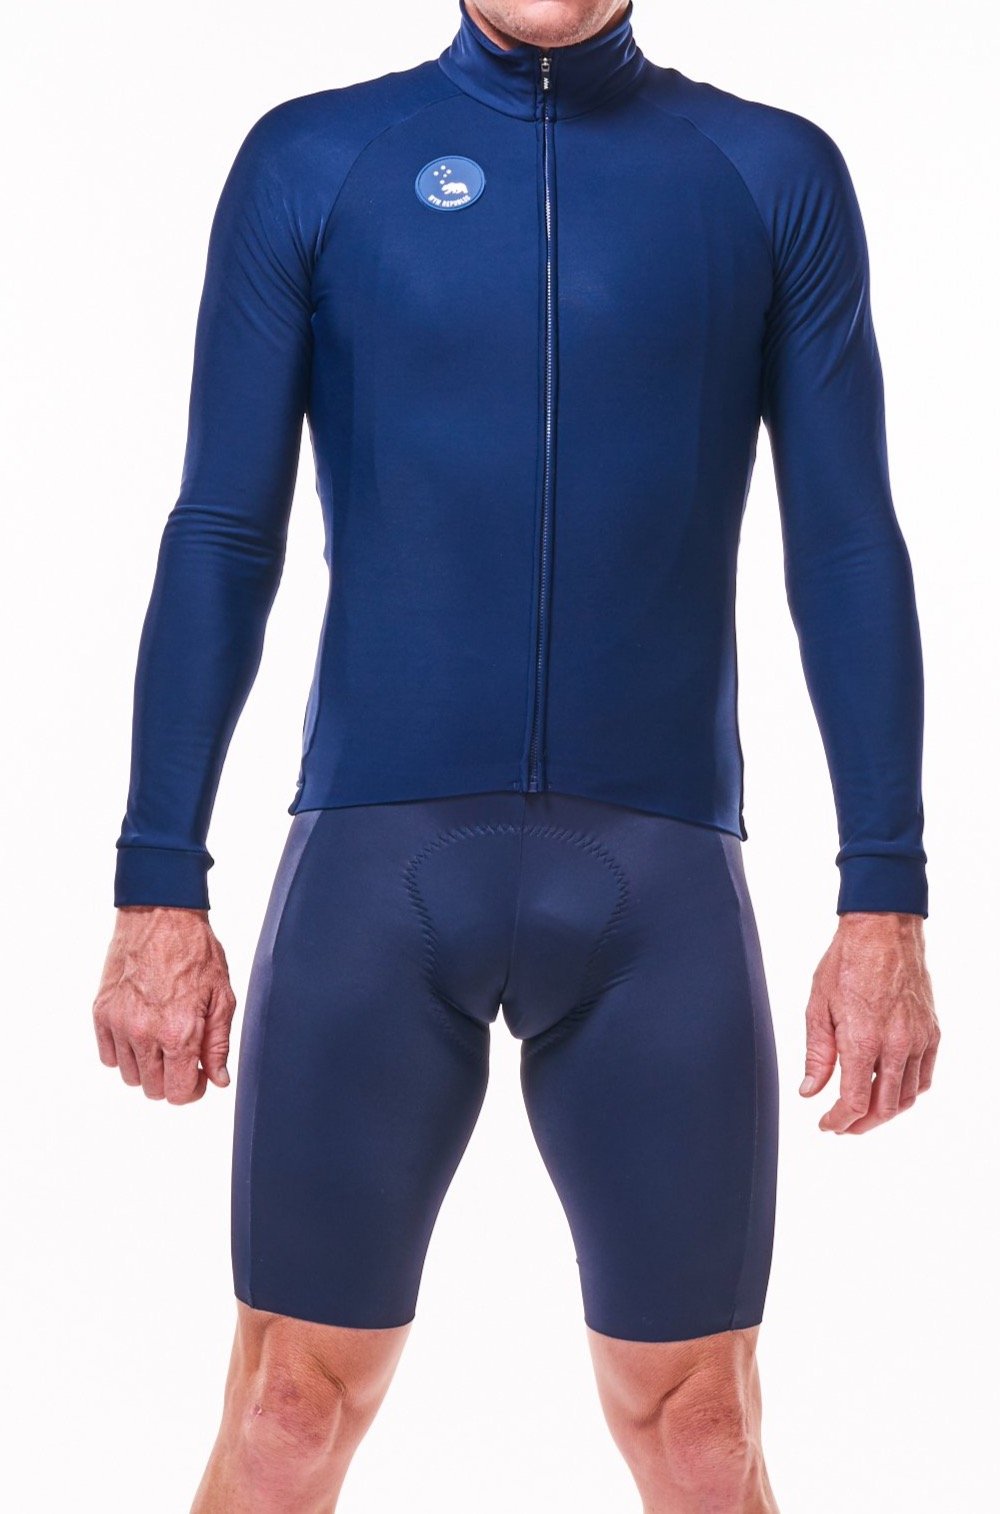 Men's Italian Thermal Cycling Jacket - Deep Navy